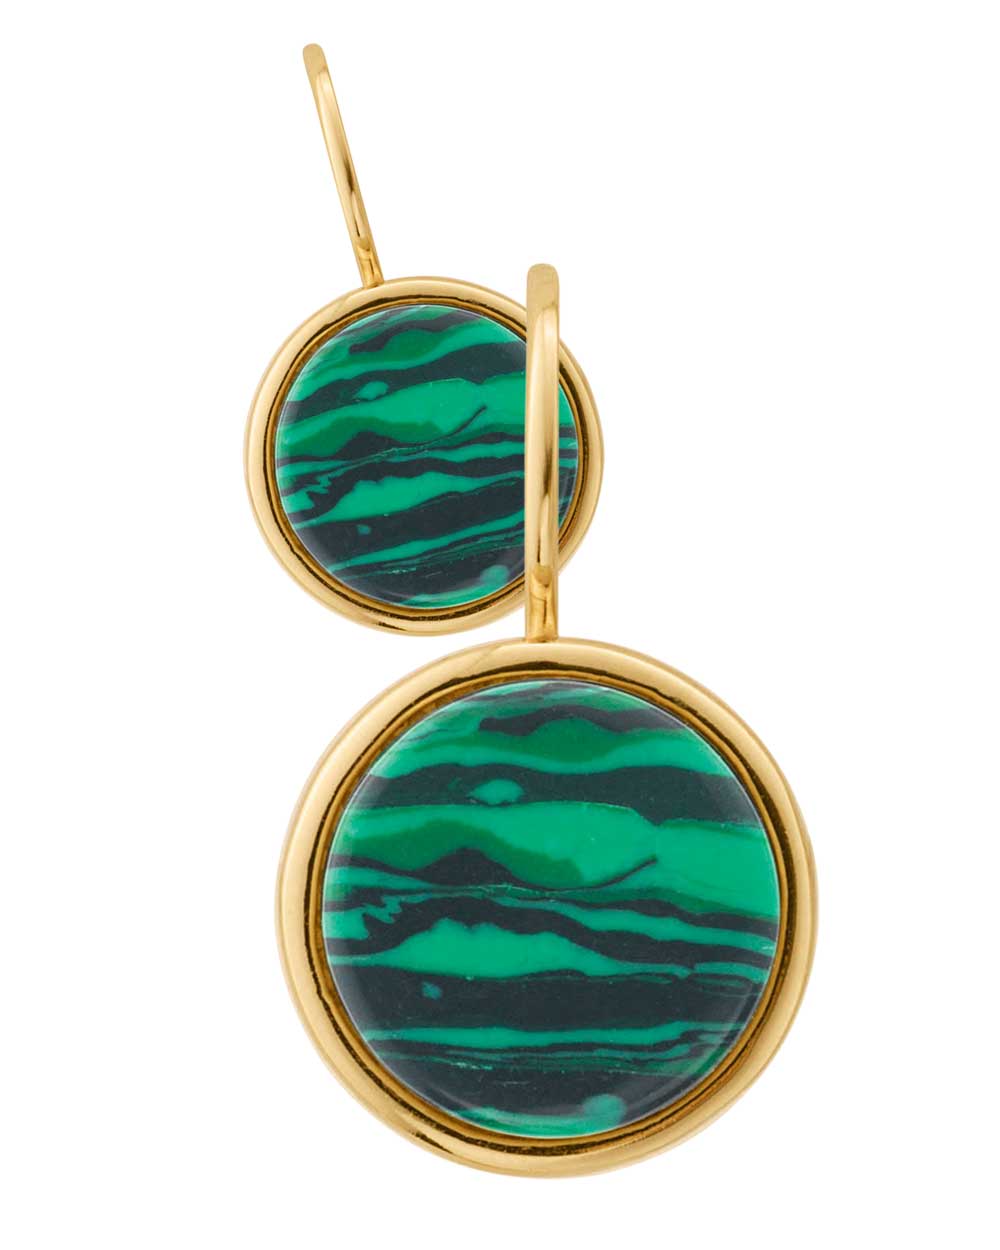 Dyberg/Kern earrings, $149